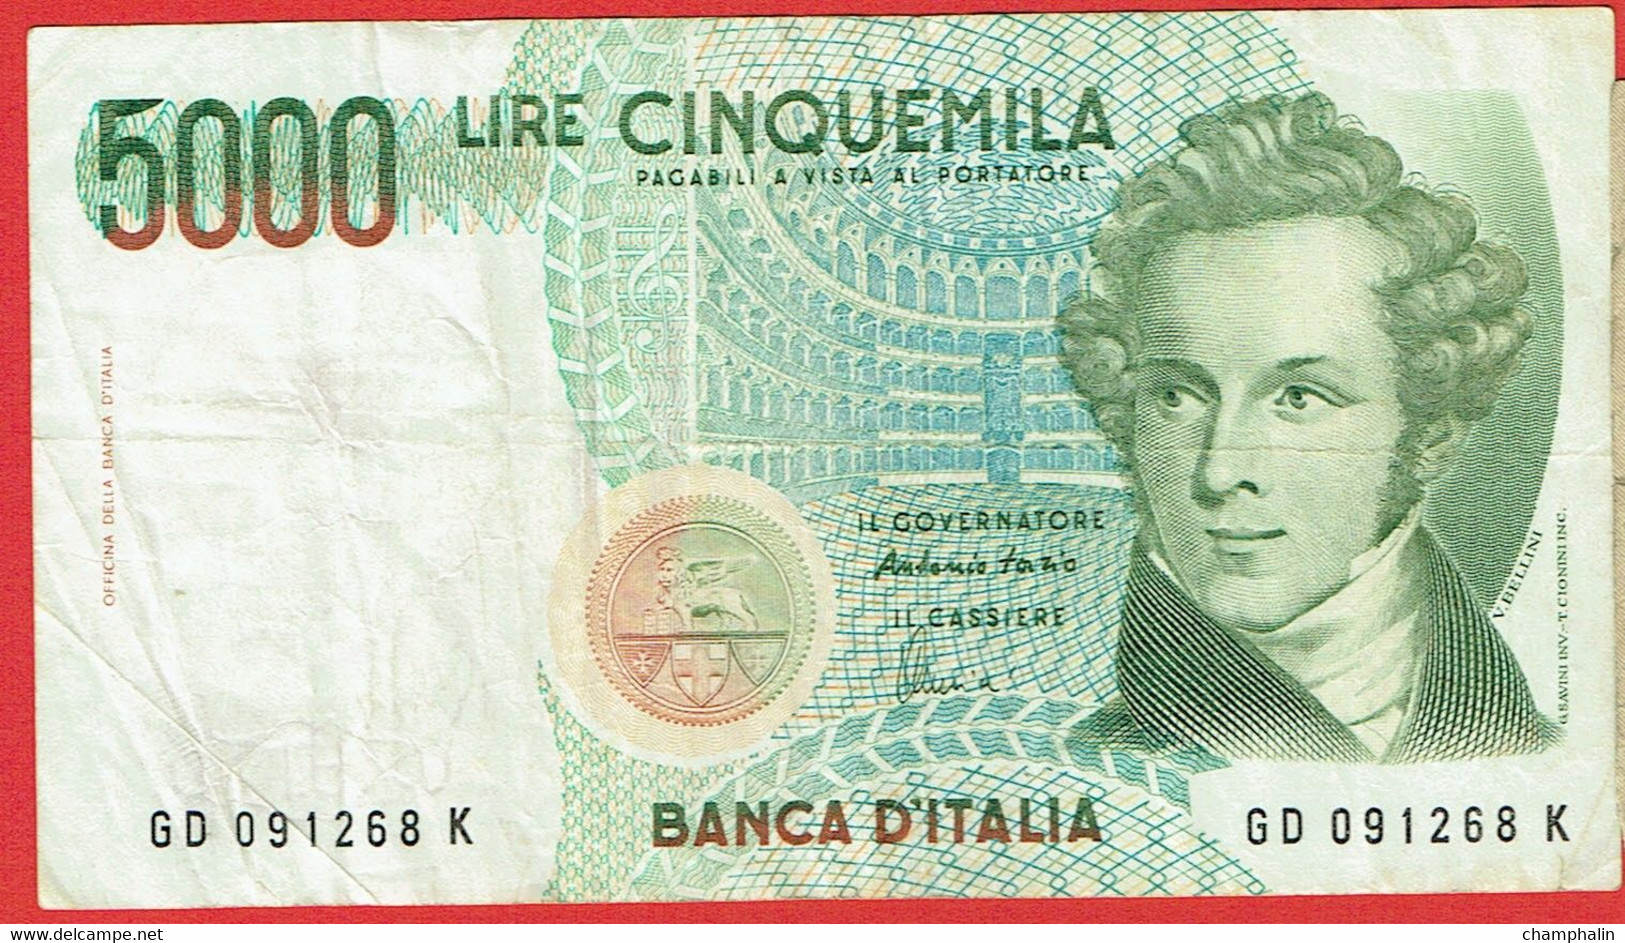 Italie - Billet De 5000 Lire - Vincenzo Bellini - 4 Juin 1985 - P111c - 5.000 Lire